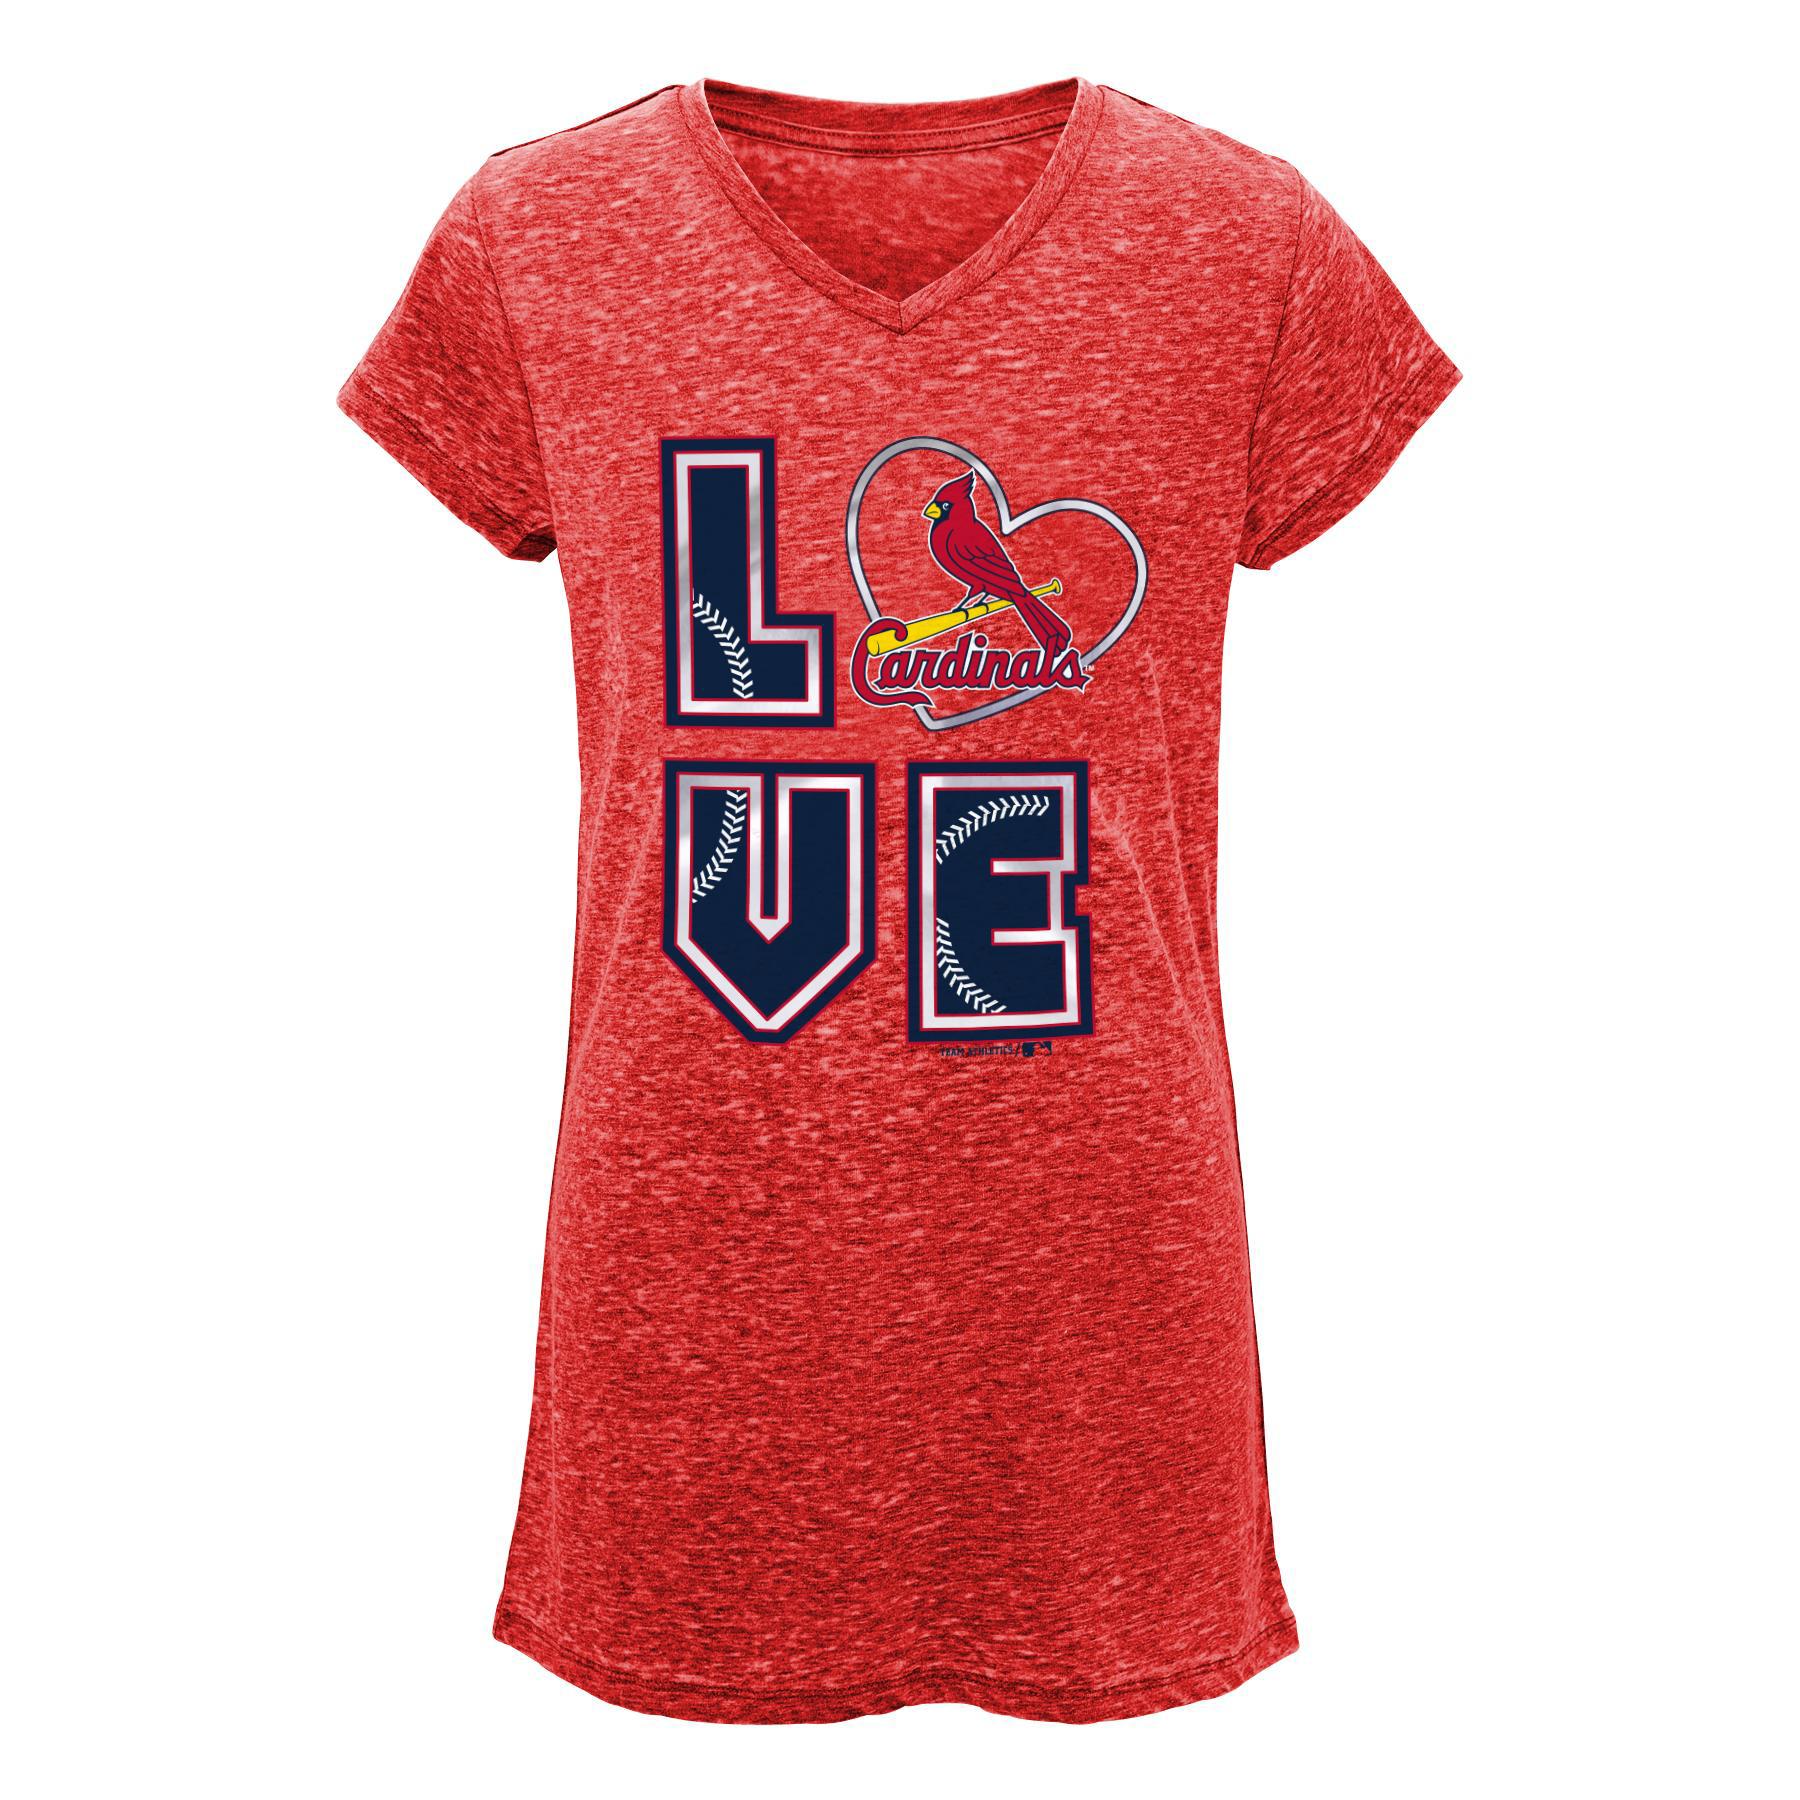 MLB Girls' Burnout T-Shirt - St. Louis Cardinals